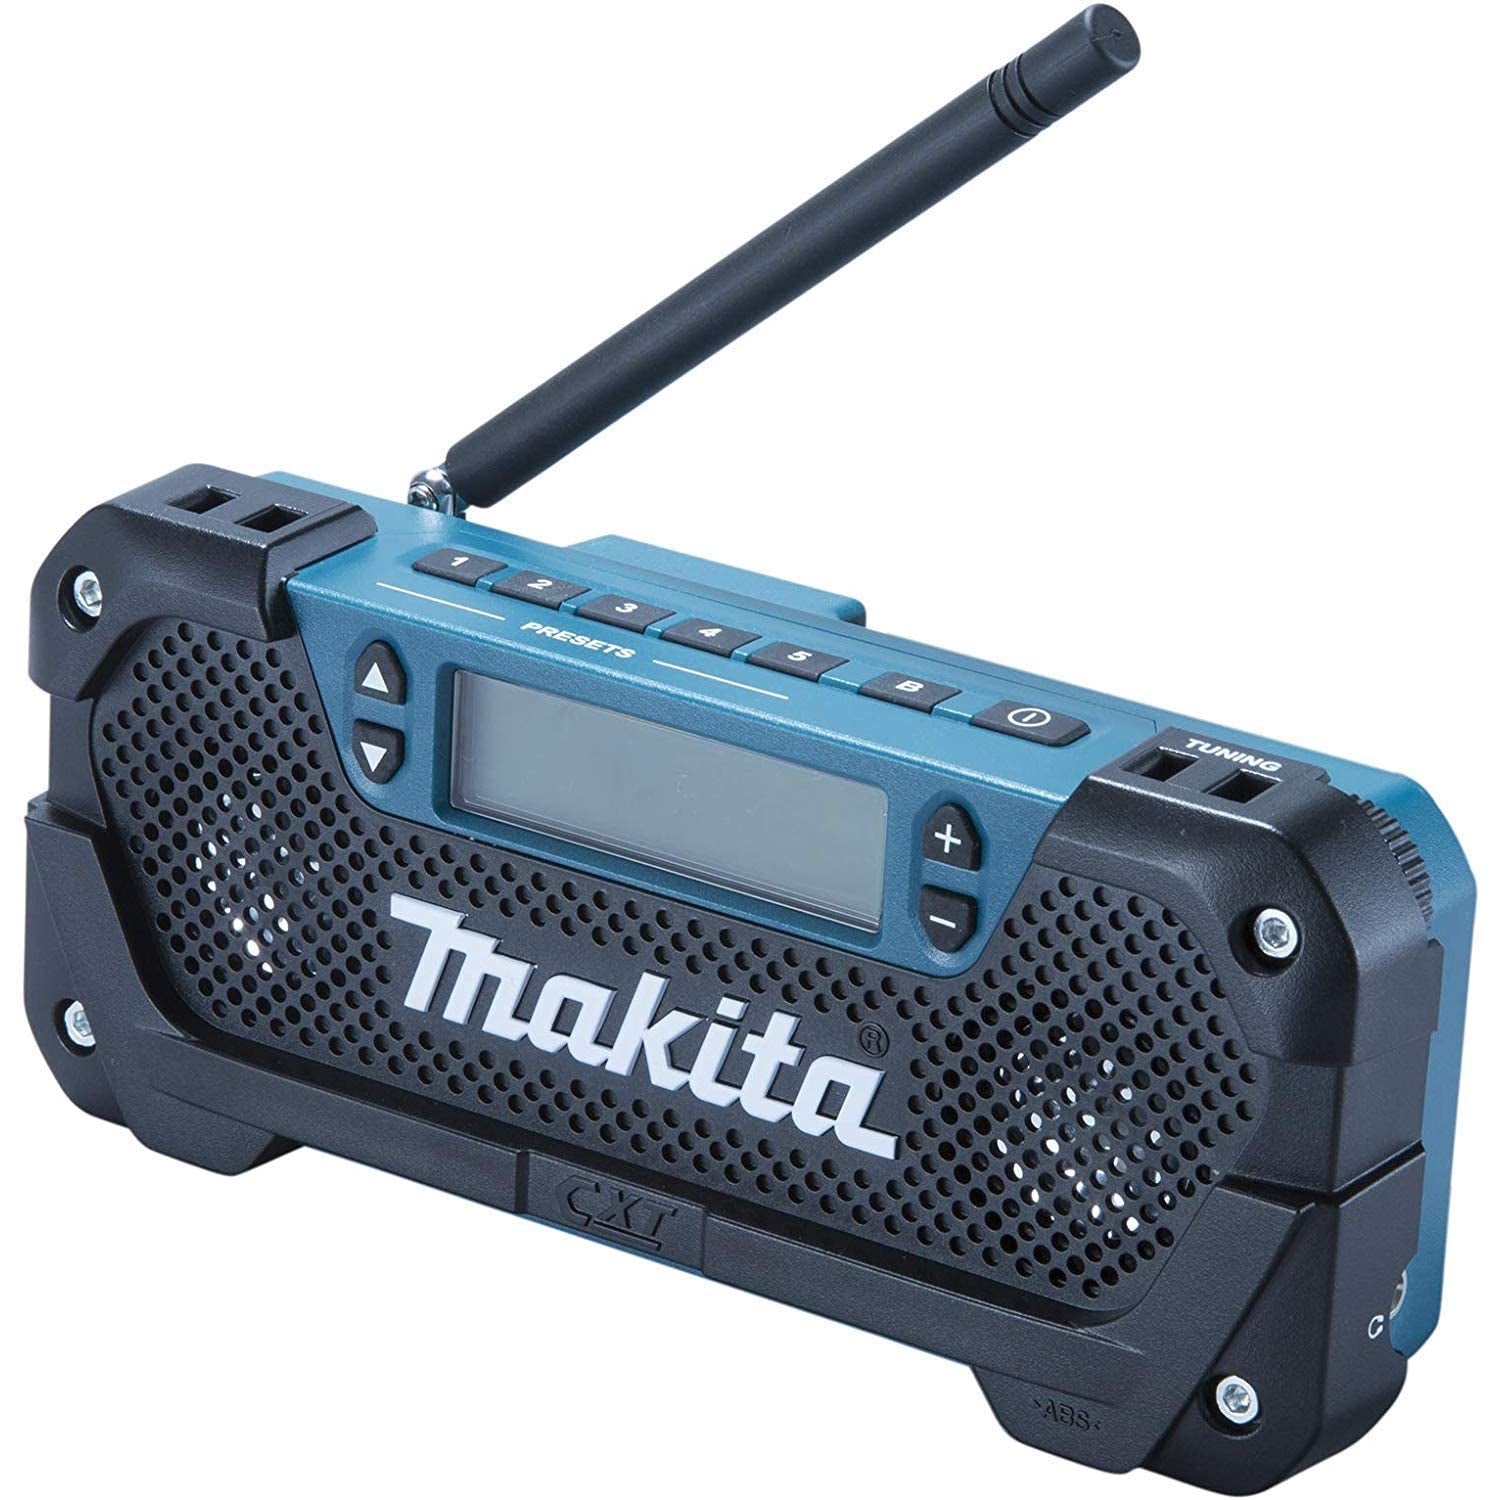 Makita MR052 Cordless Site Radio, 12V with digital AM/FM tuner - Black and Green